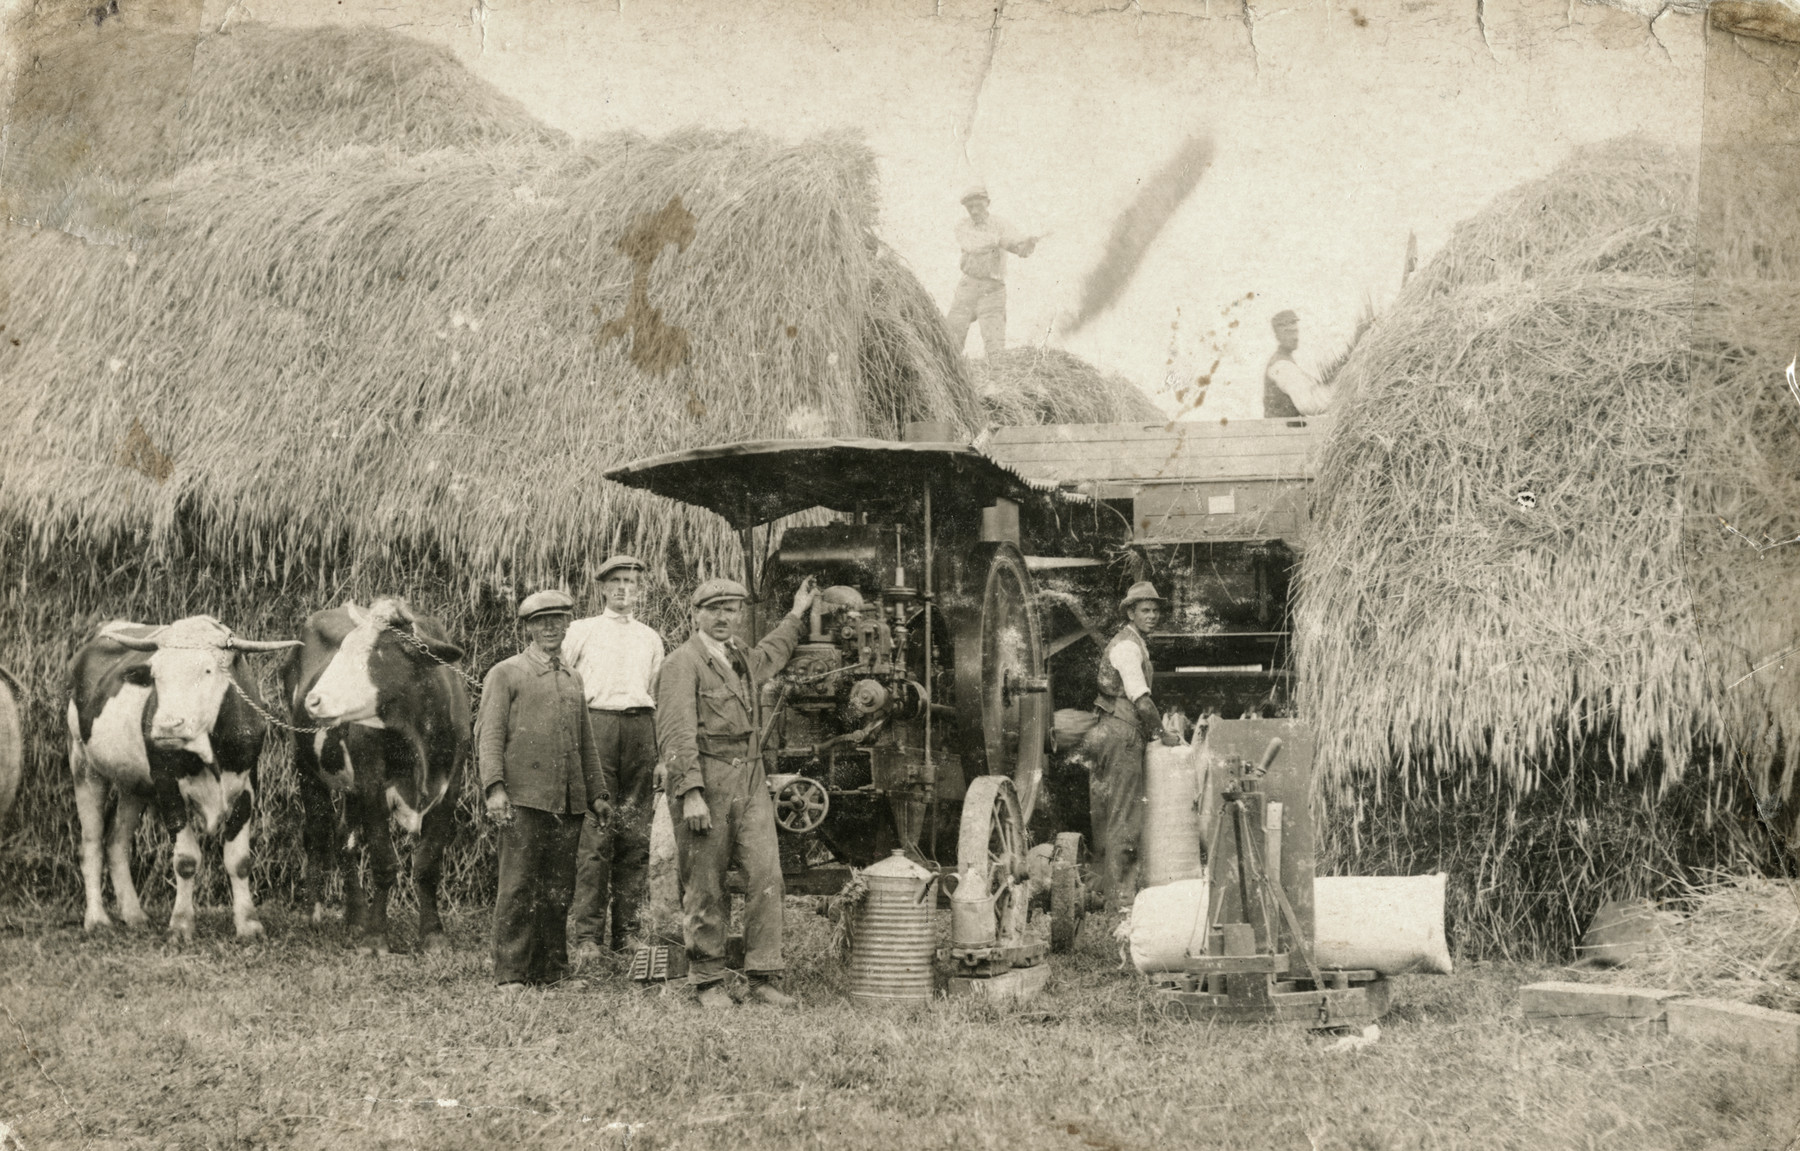 Avraham Bernat Koviliak (center) works with a threshing machine on a farm in the summertime.